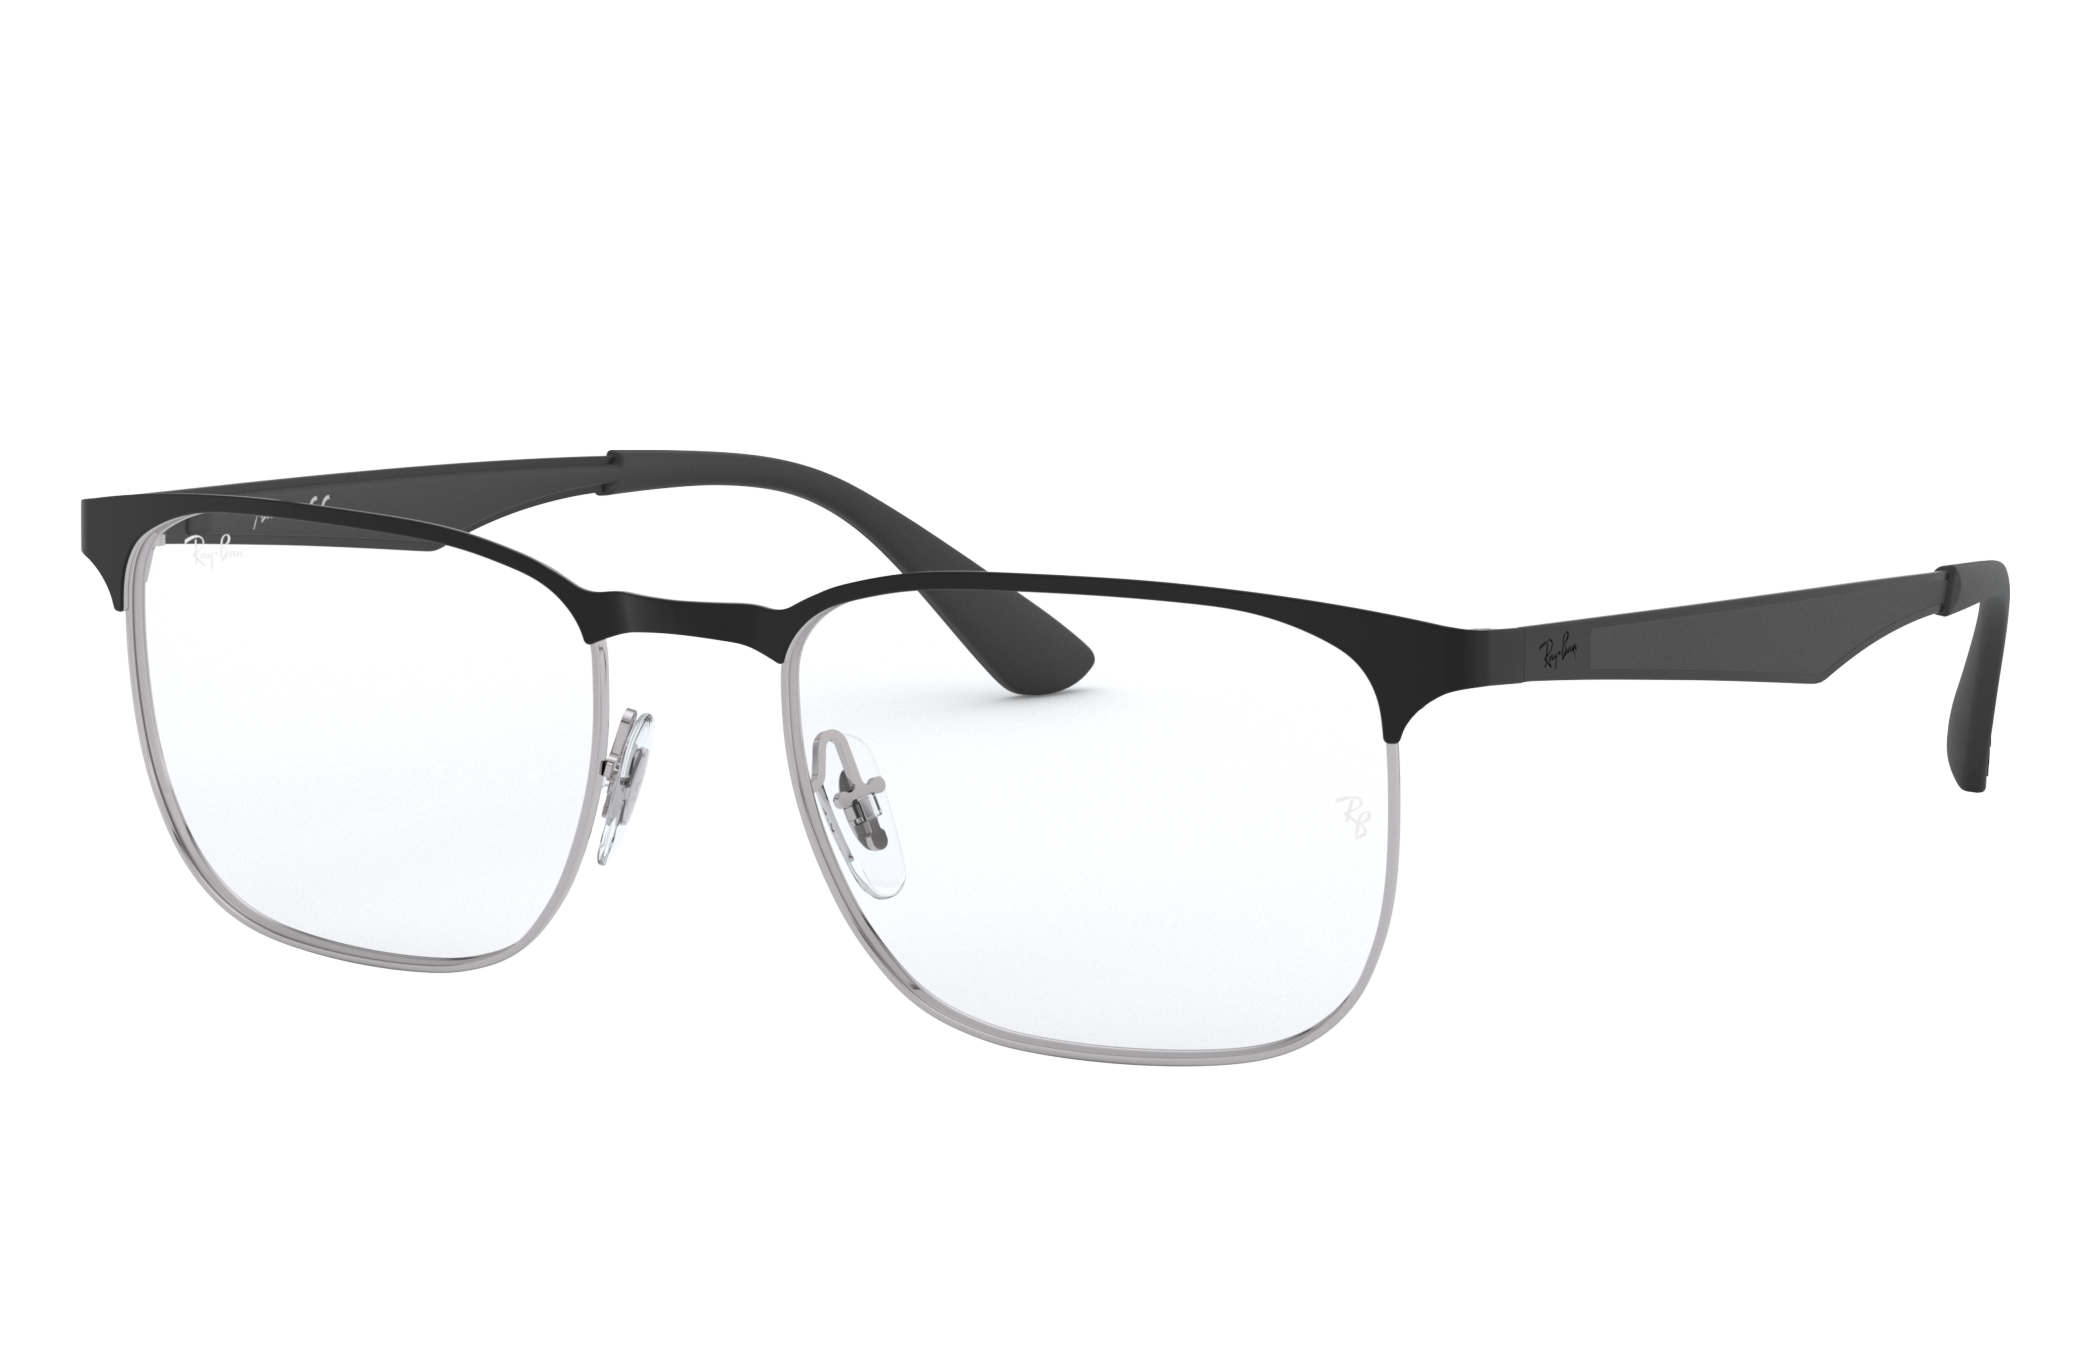 Rb6363 Optics Eyeglasses with Black On Silver Frame | Ray-Ban®